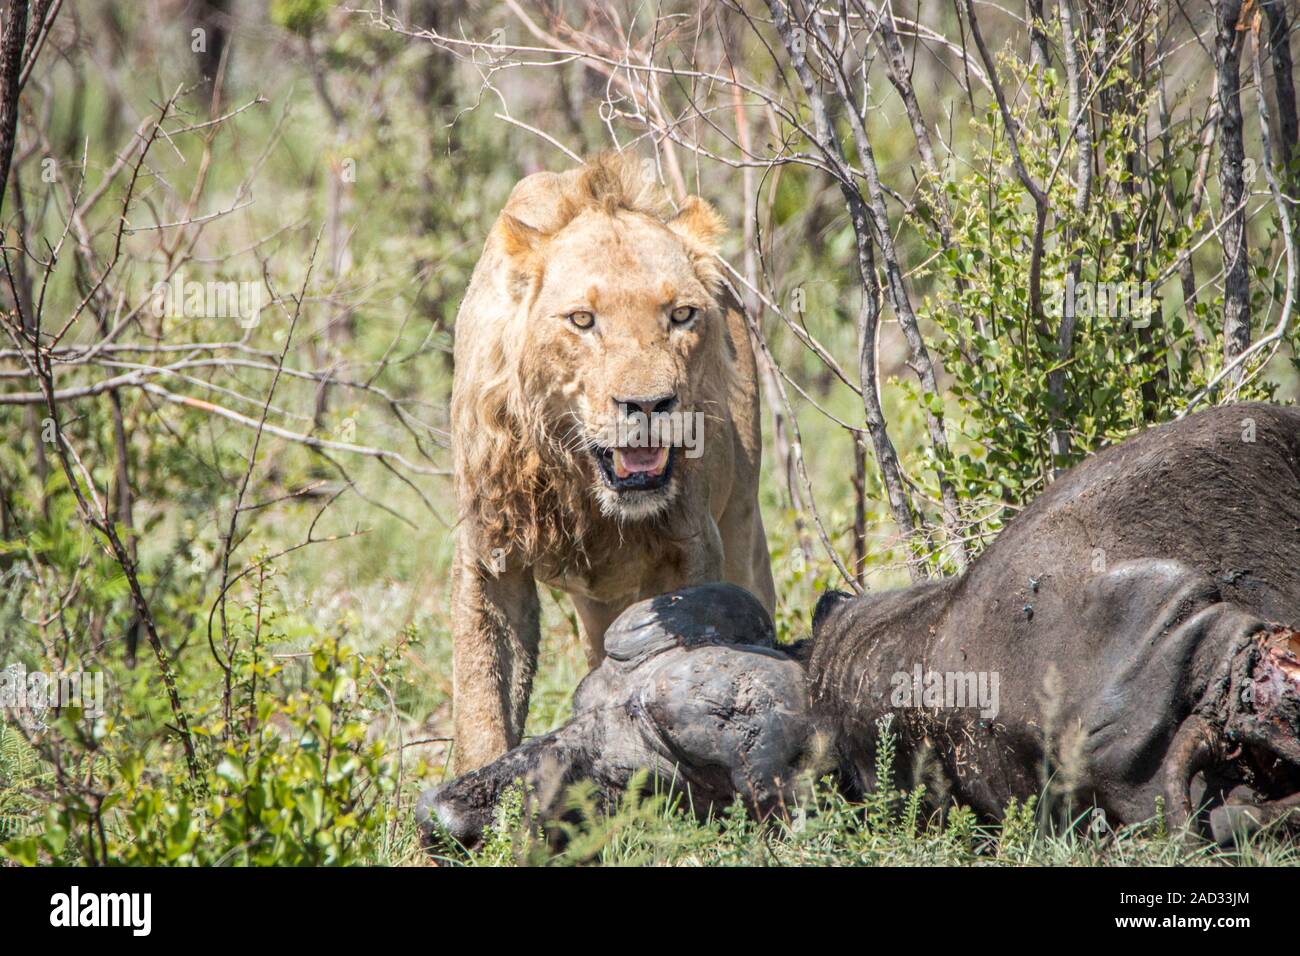 Lion Kill Buffalo High Resolution Stock Photography and Images - Alamy